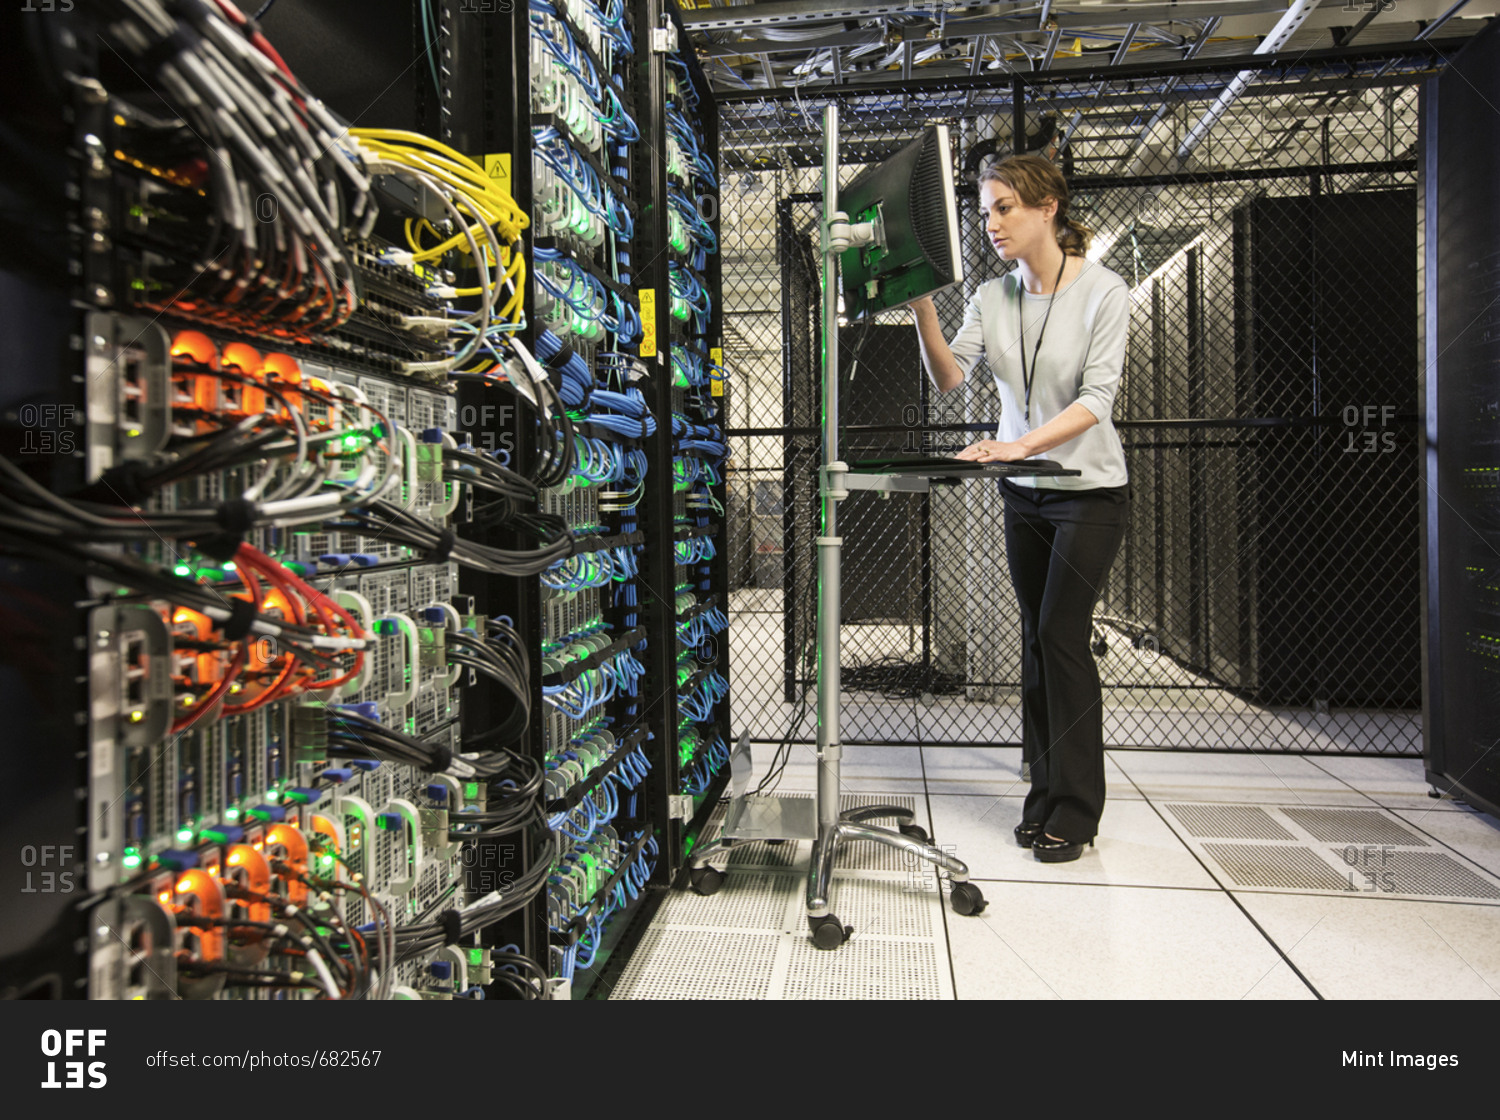 Caucasian woman technician doing diagnostic tests  on computer servers in a server farm.